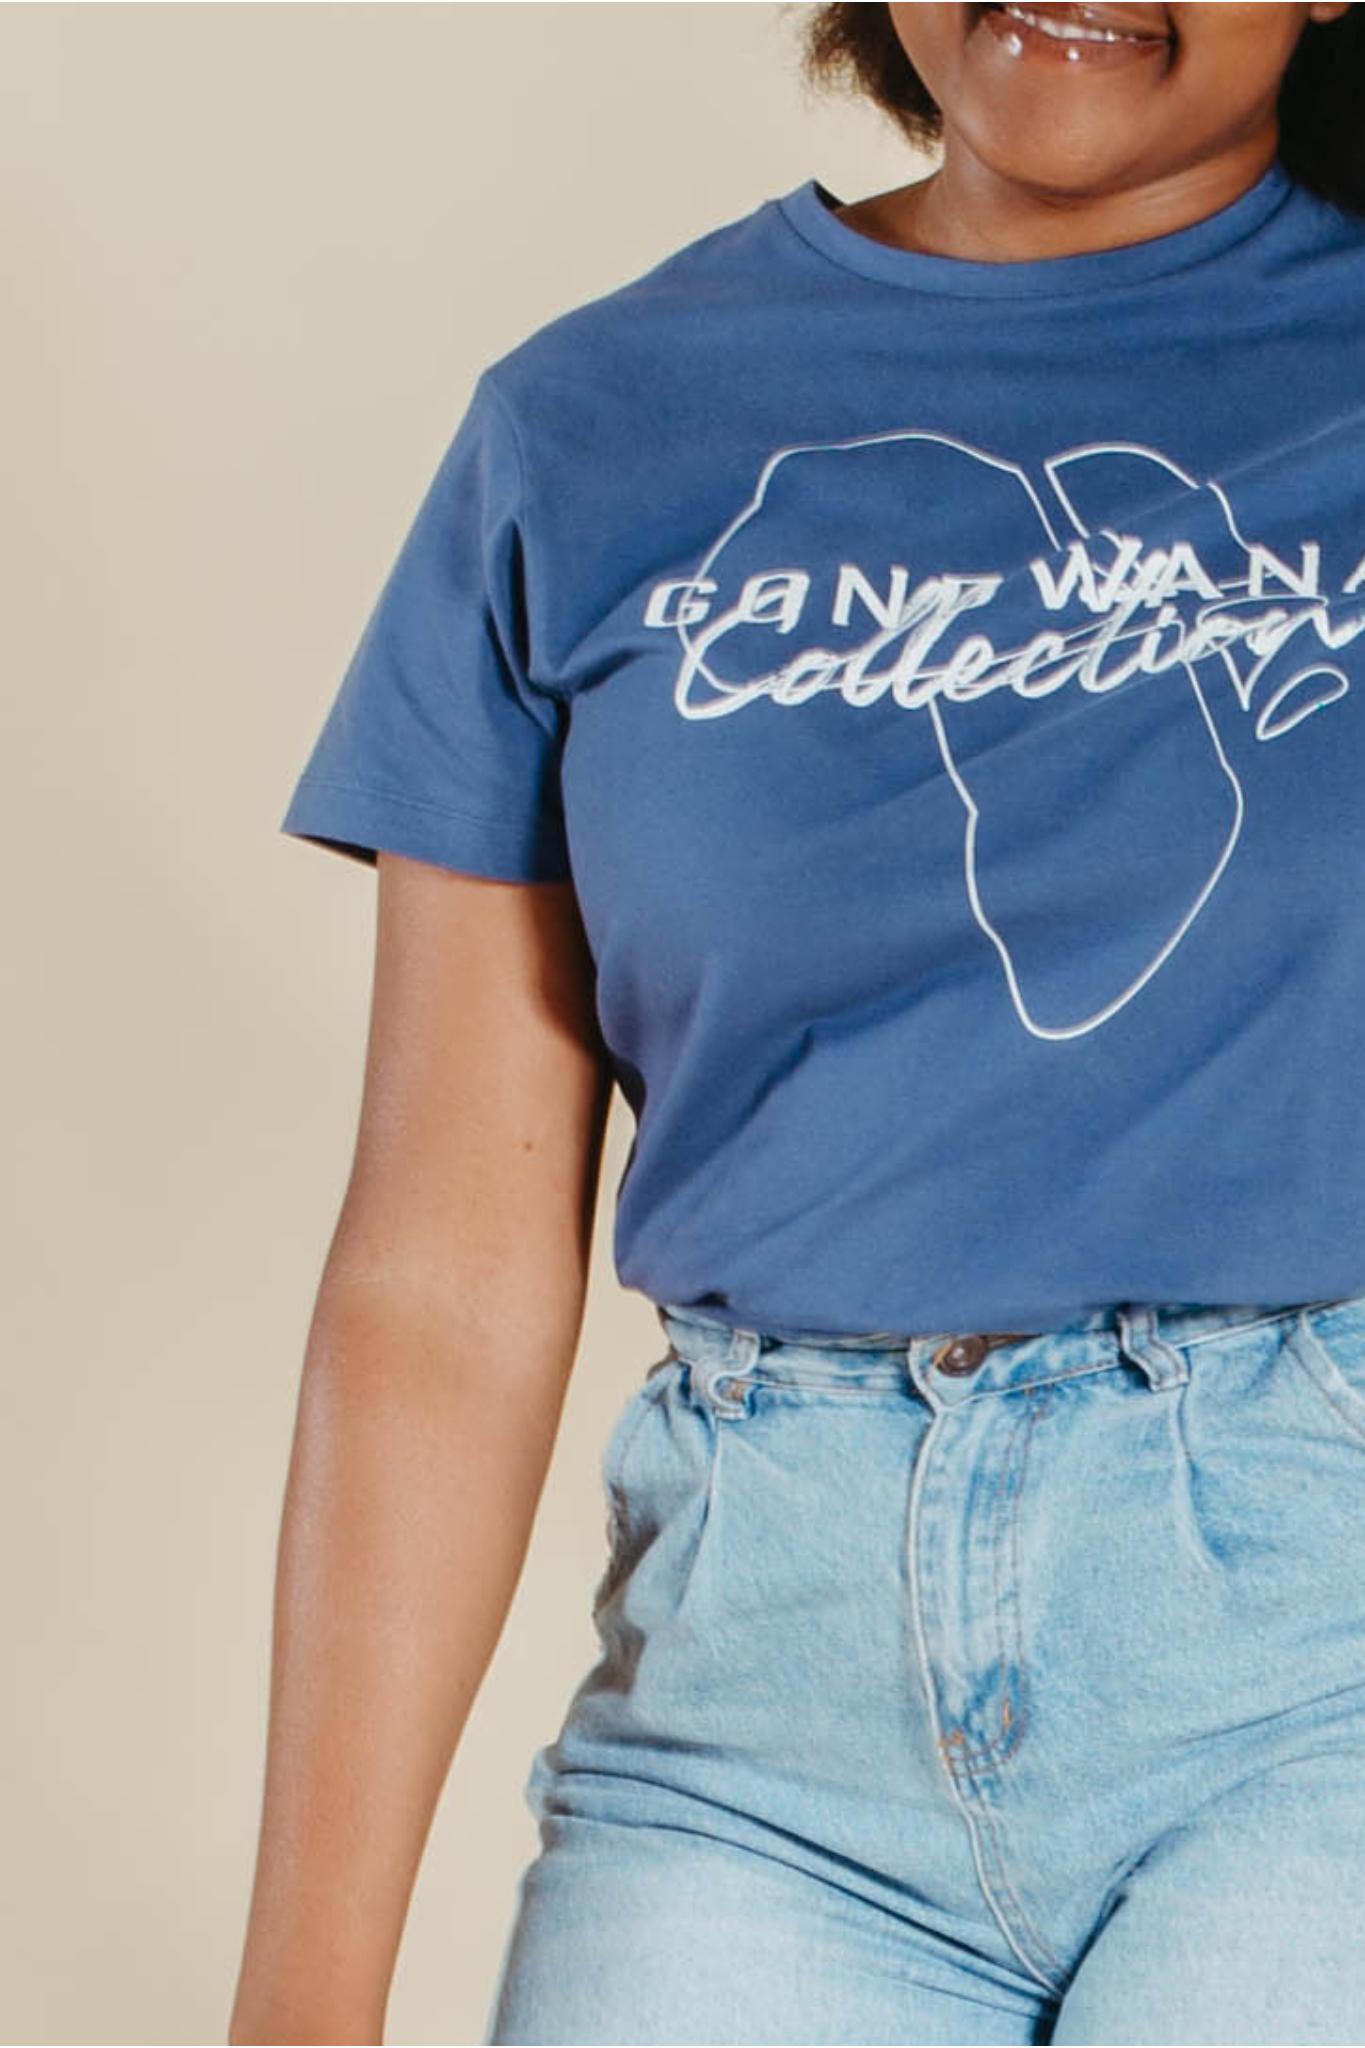 Gondwana Women's T-shirt Navy